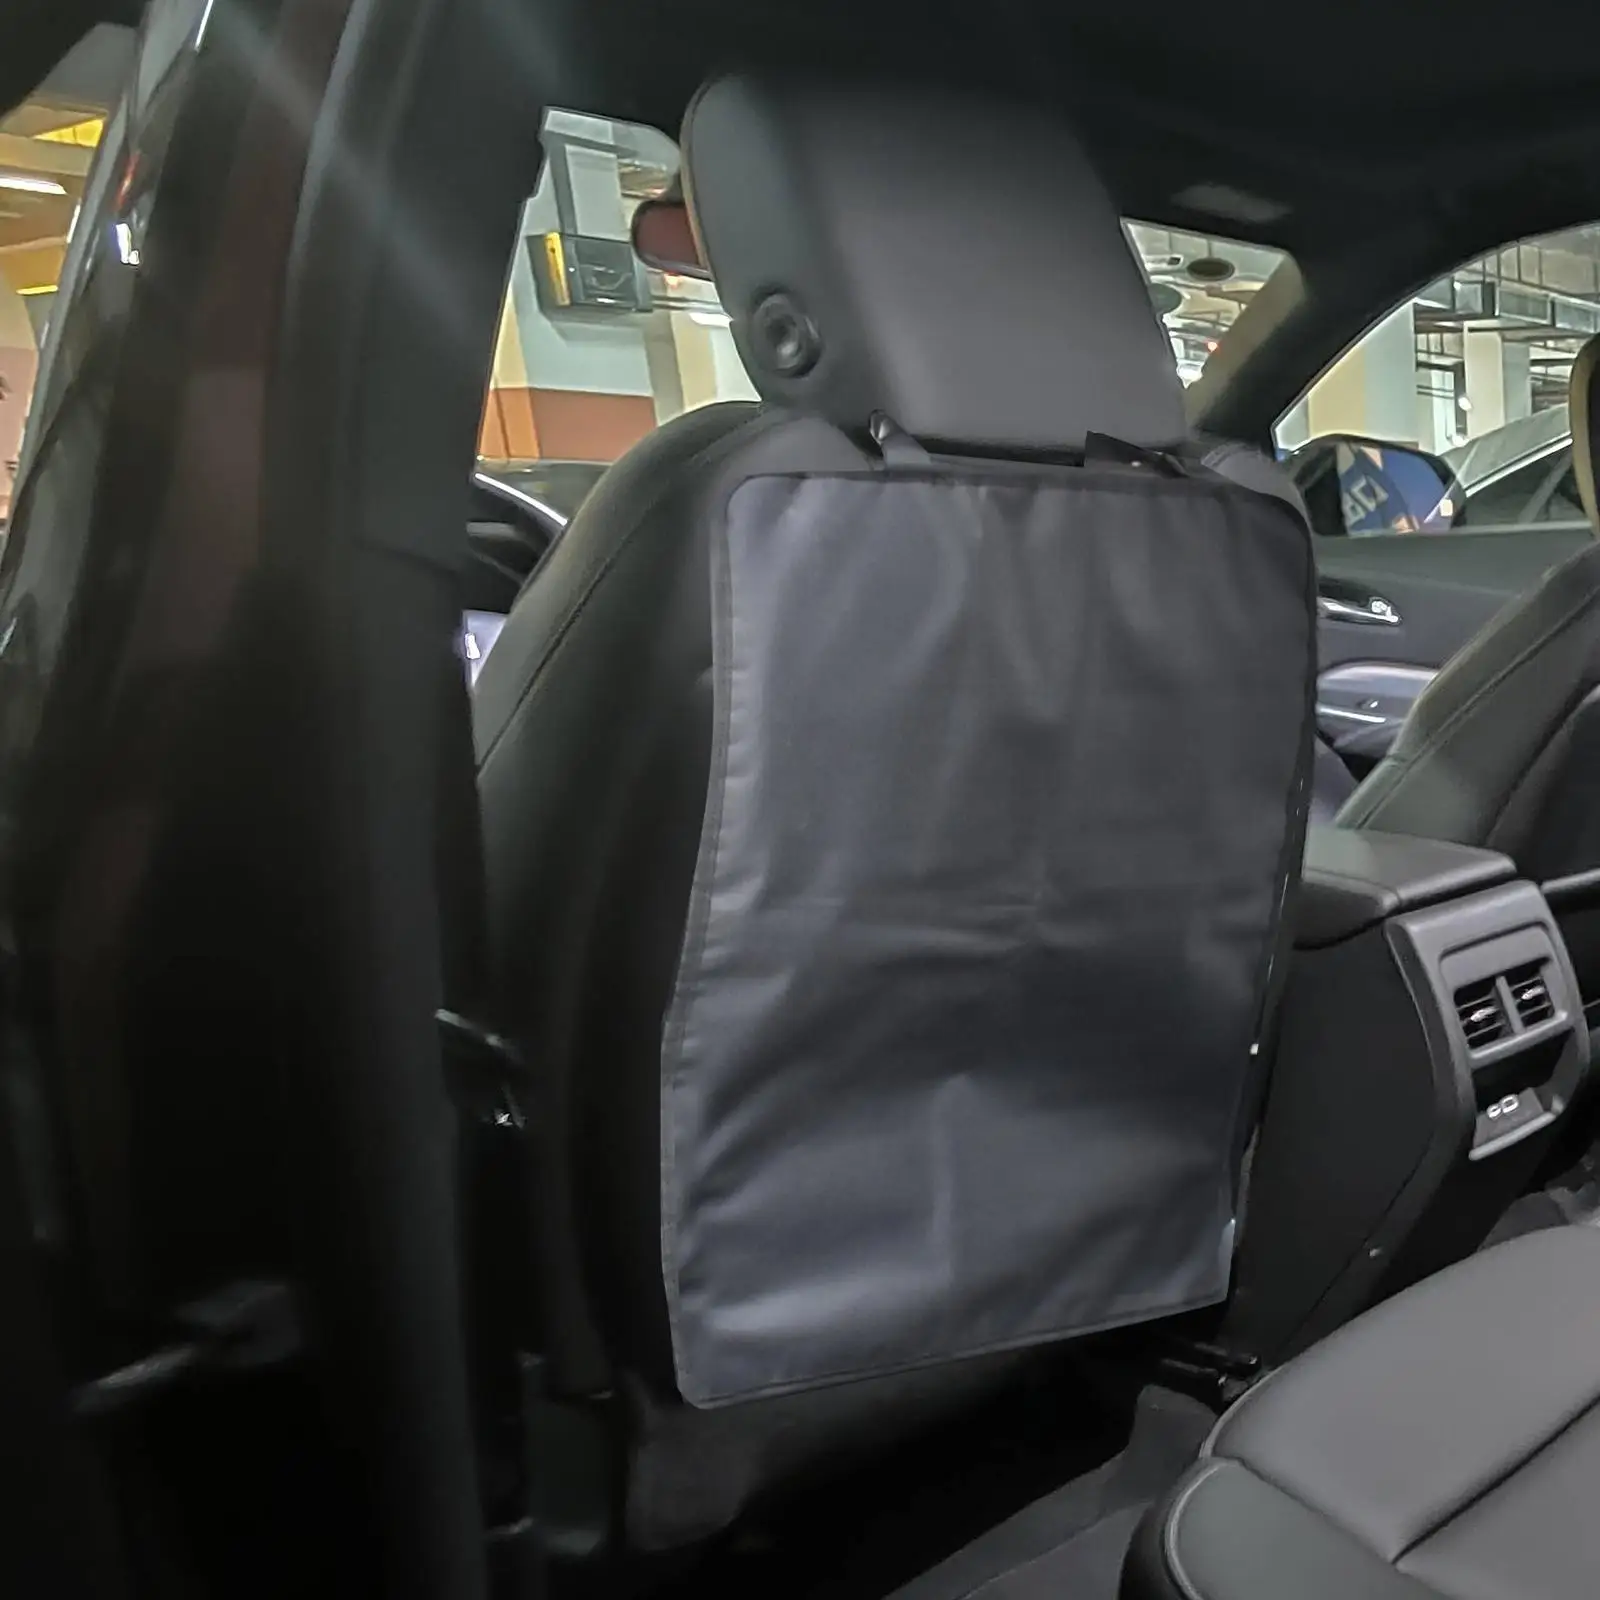 Kick Mats Waterproof Backseat Protector for Vehicles Most Suvs and Vans